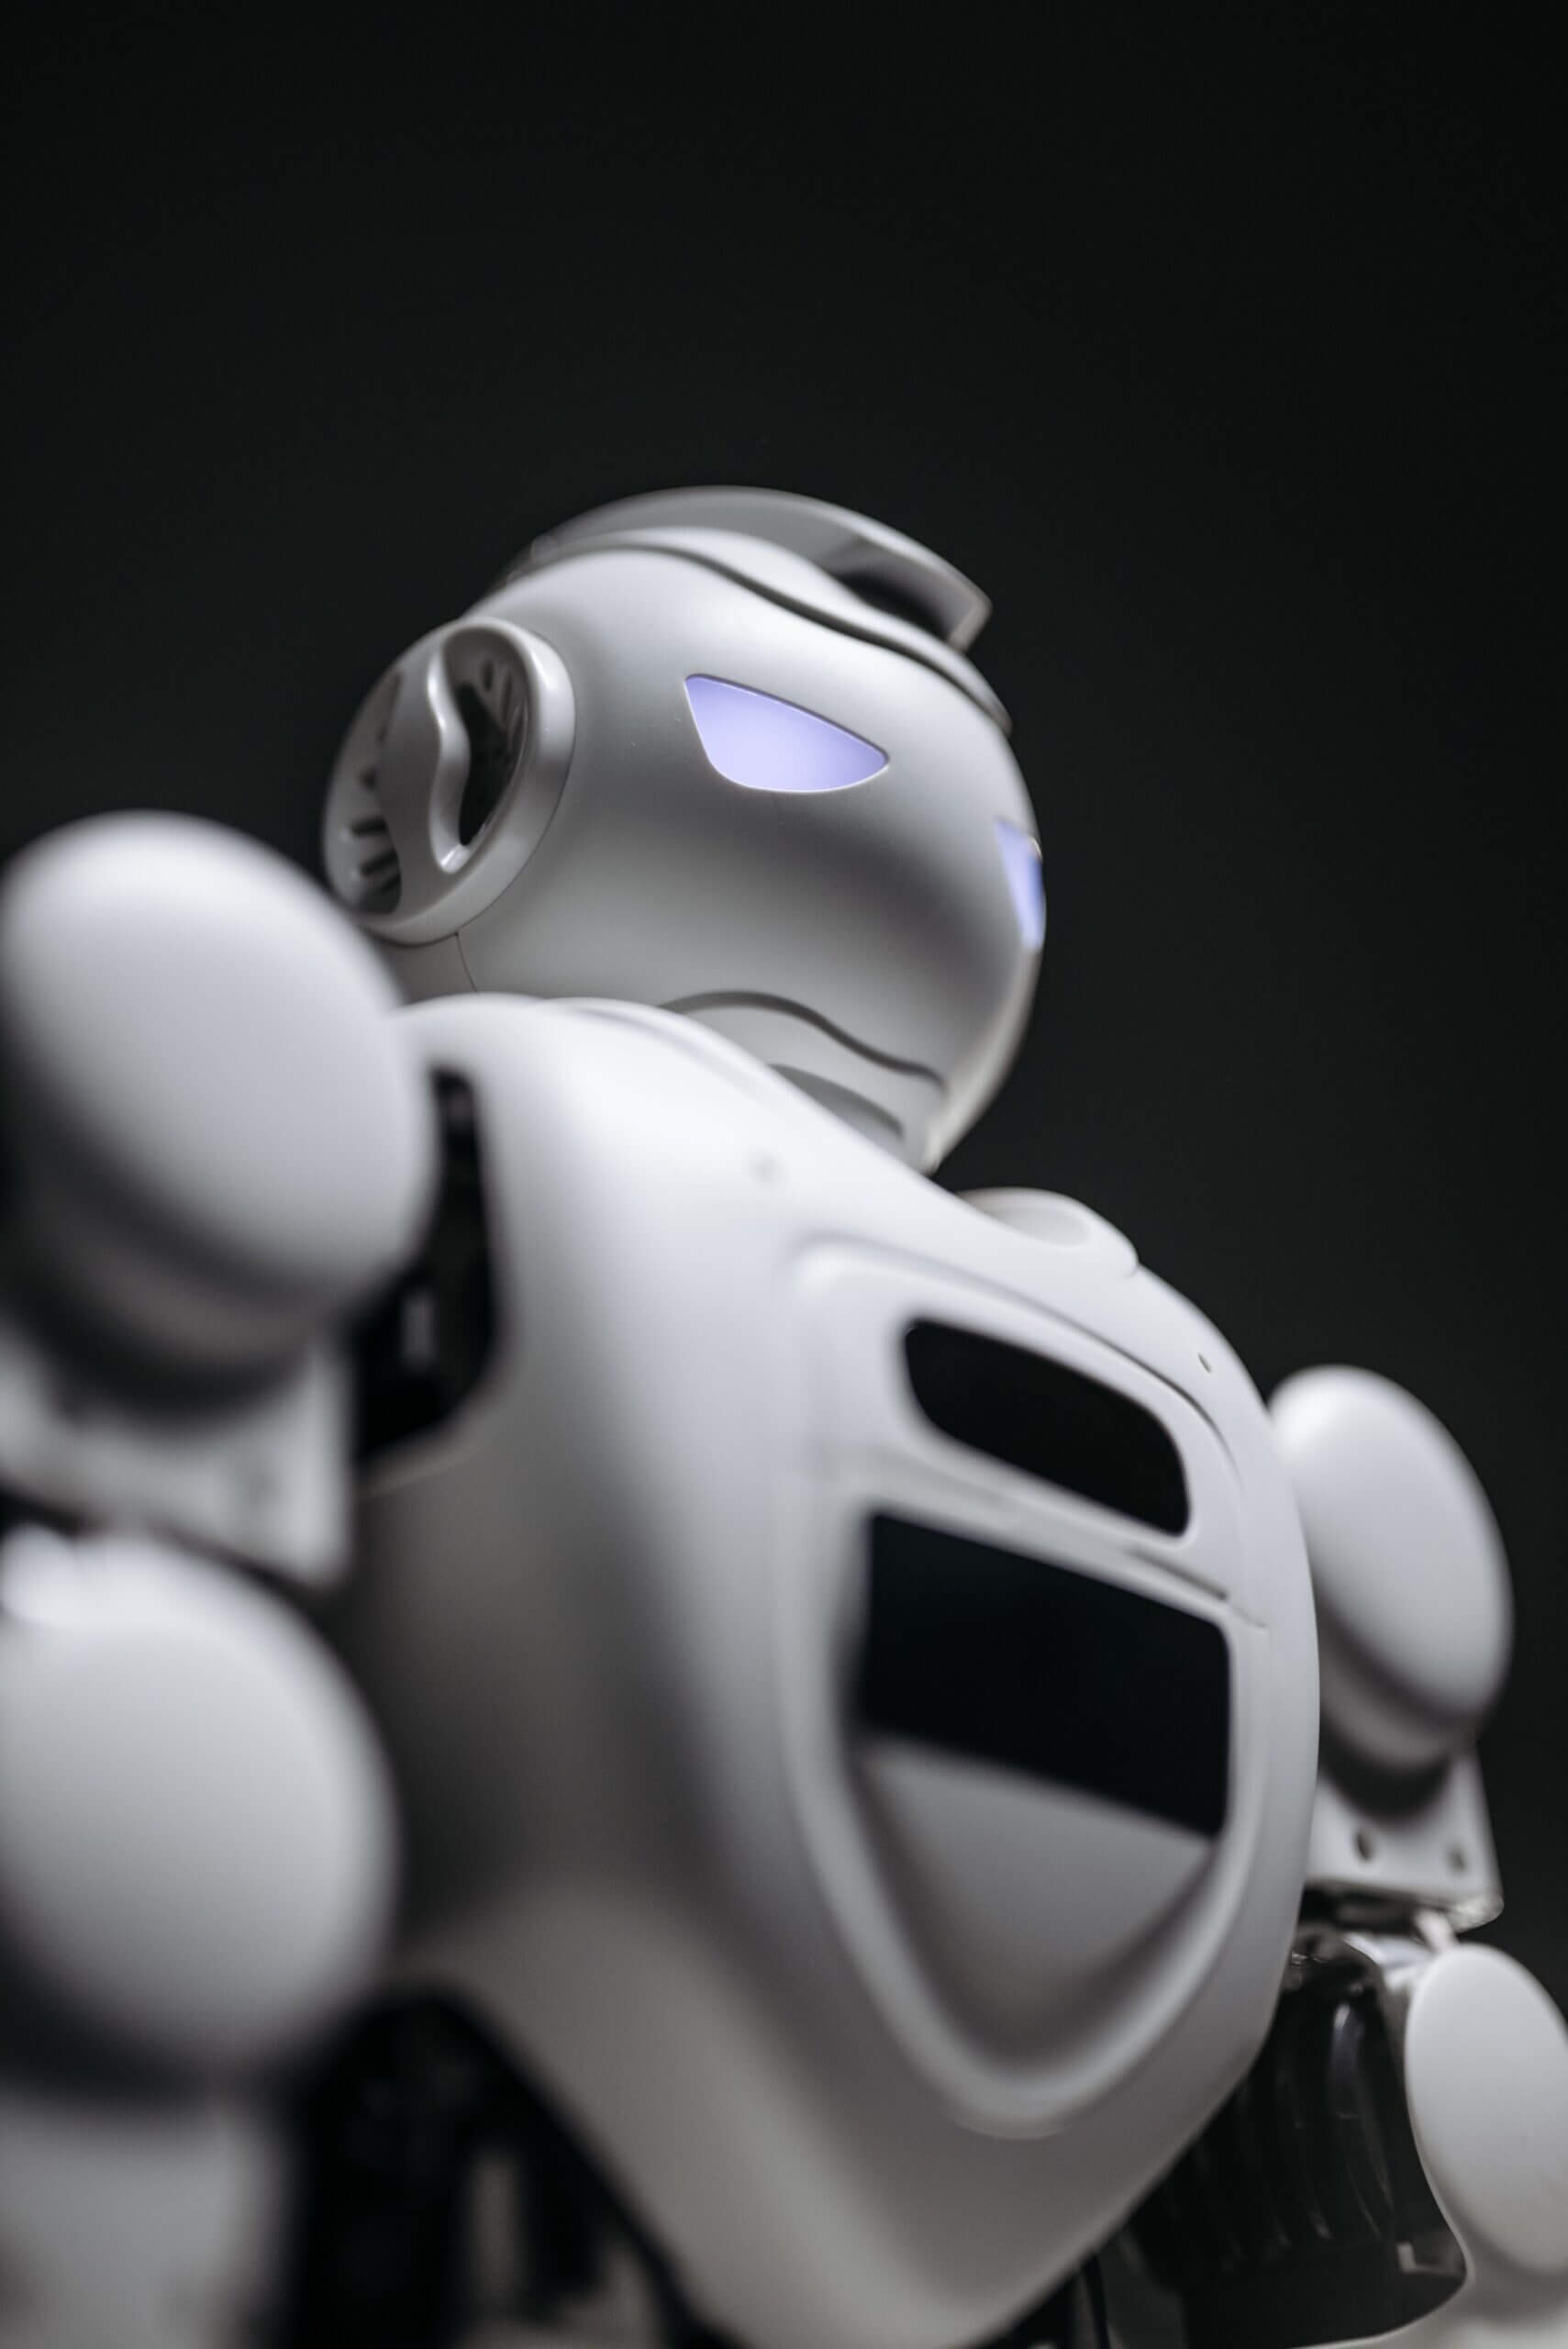 Automating Social Media Robots